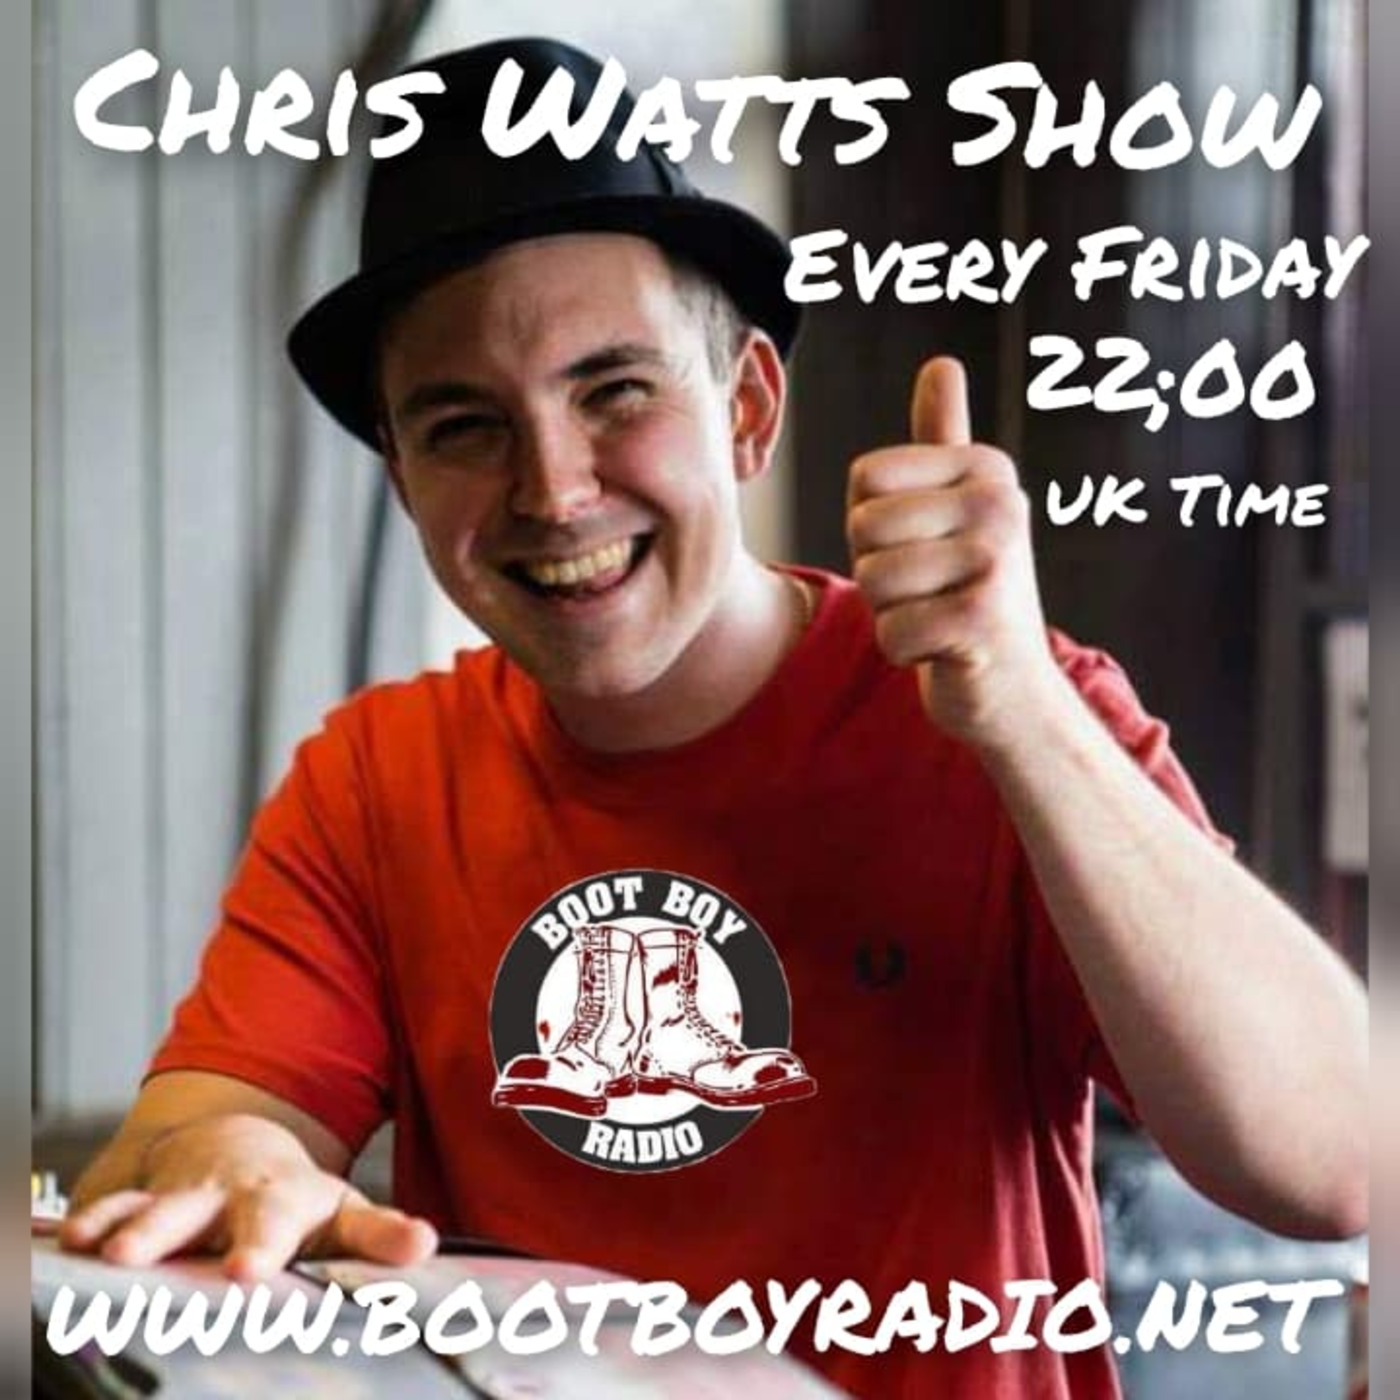 Episode 2528: Chris Watts Show 2nd September 2022 On www.bootboyradio.net